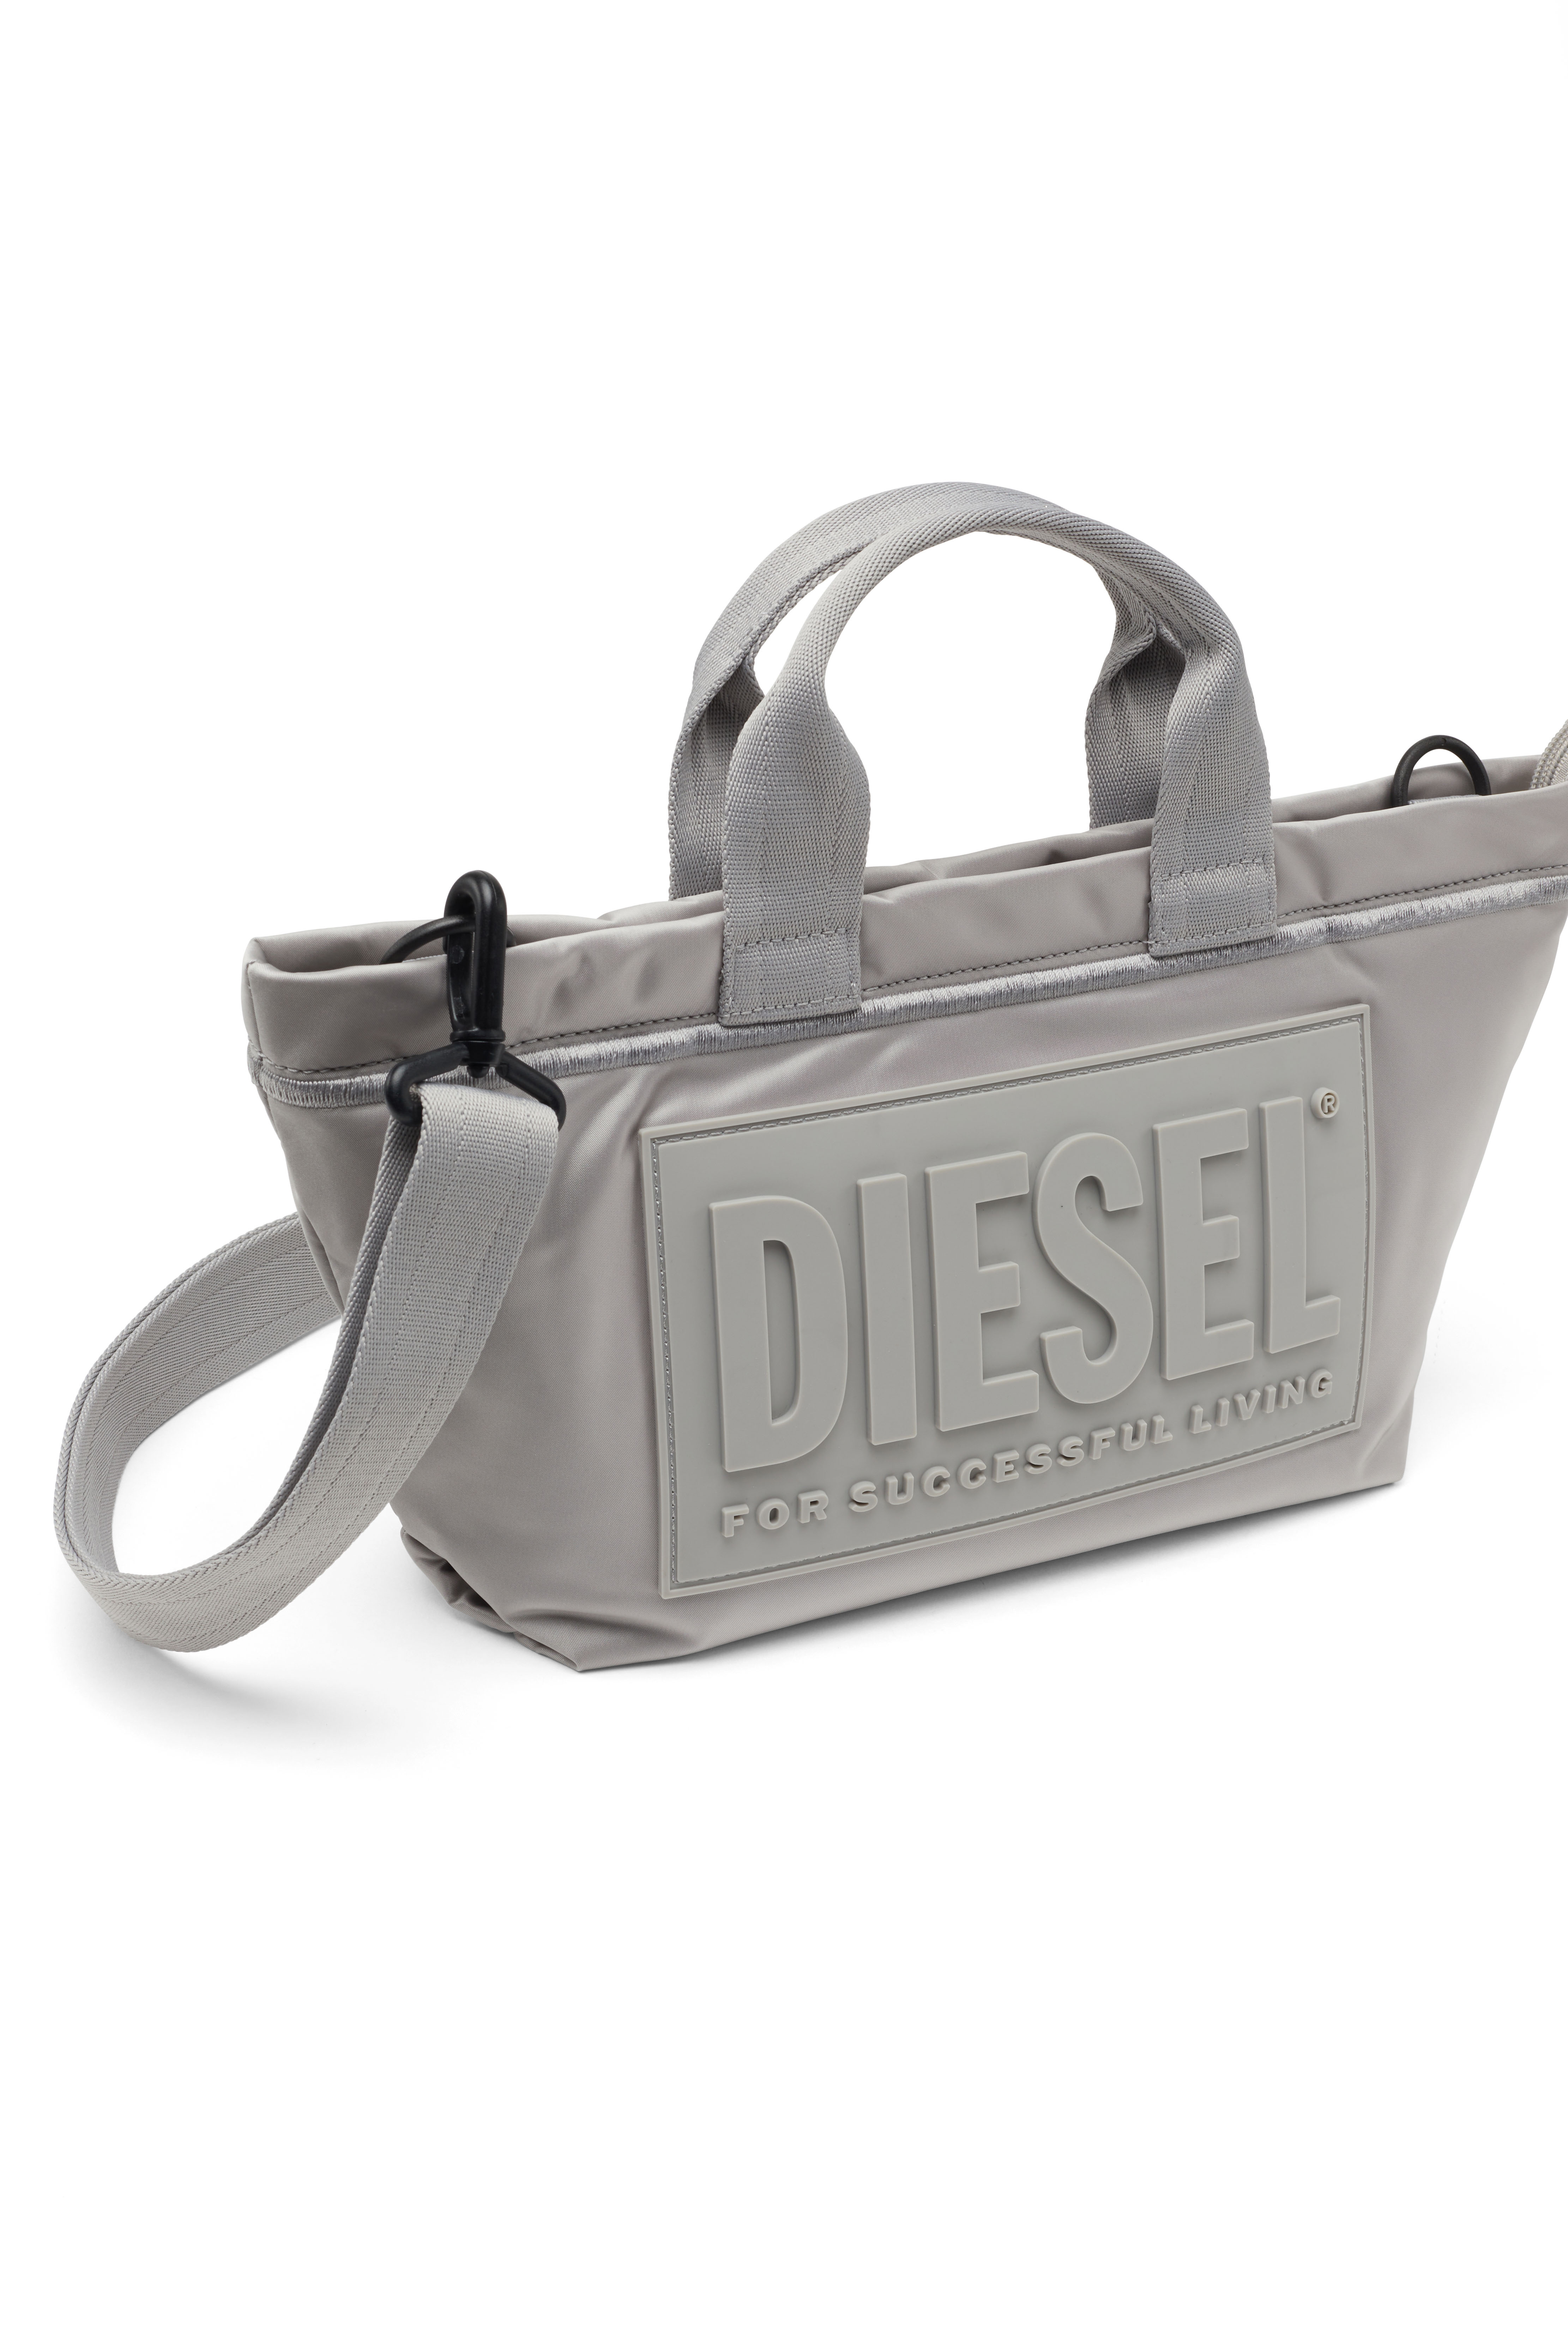 Diesel - HANDYE, グレー - Image 5